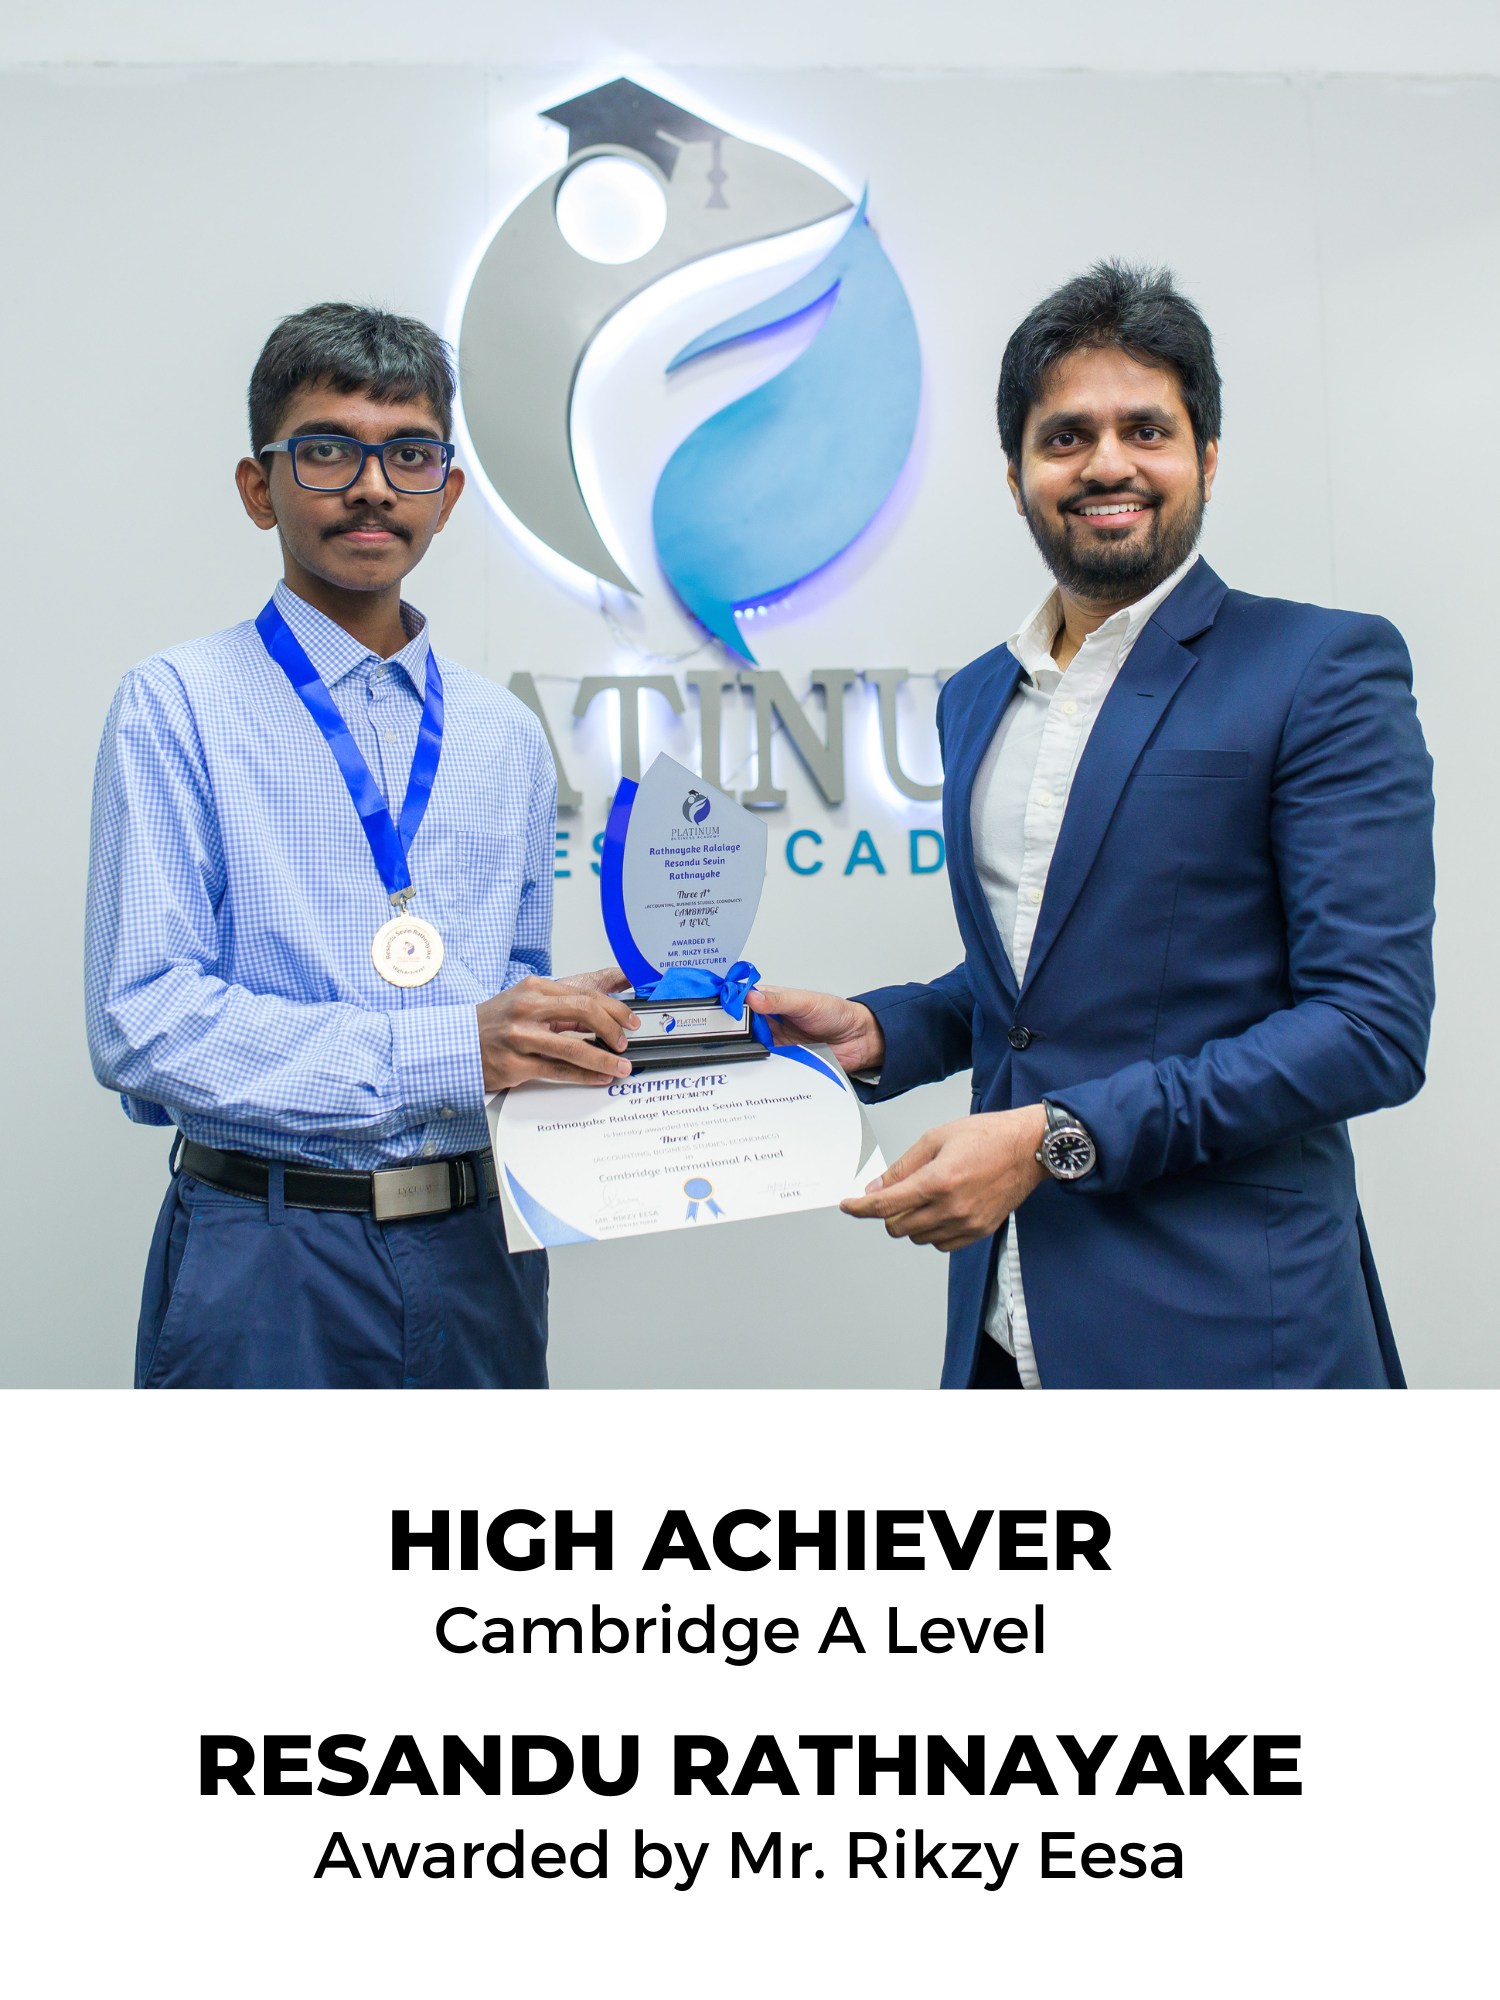 Cambridge A Level Accounting High Achiever Prize: Resandu Rathnayake
Lecturer: Mr. Rikyzy Eesa